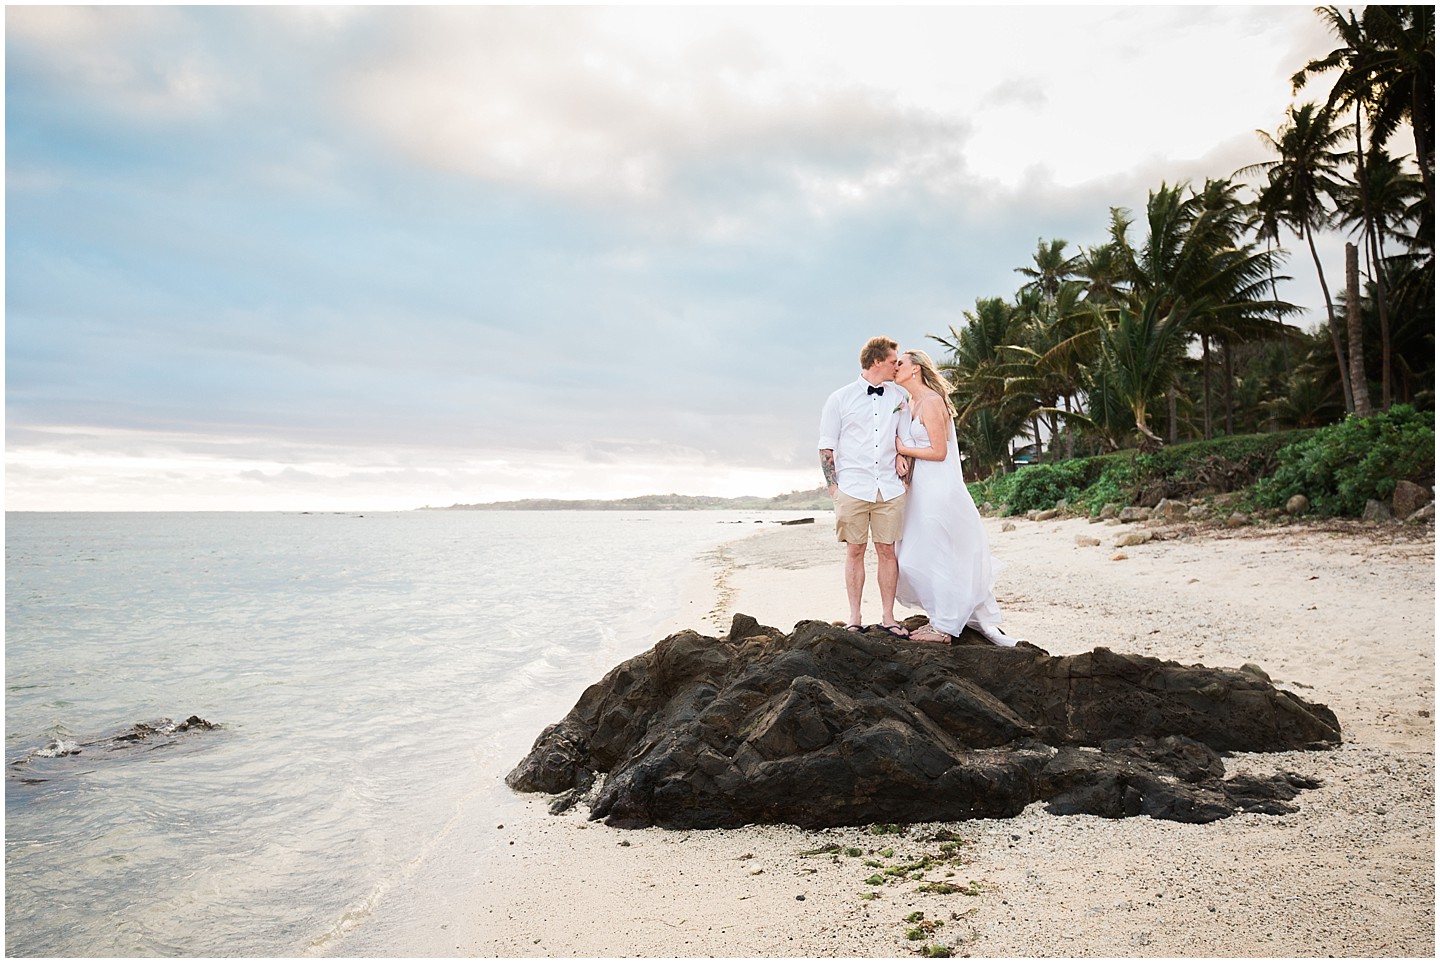 Australian couples Destination Wedding at the Outrigger Fiji